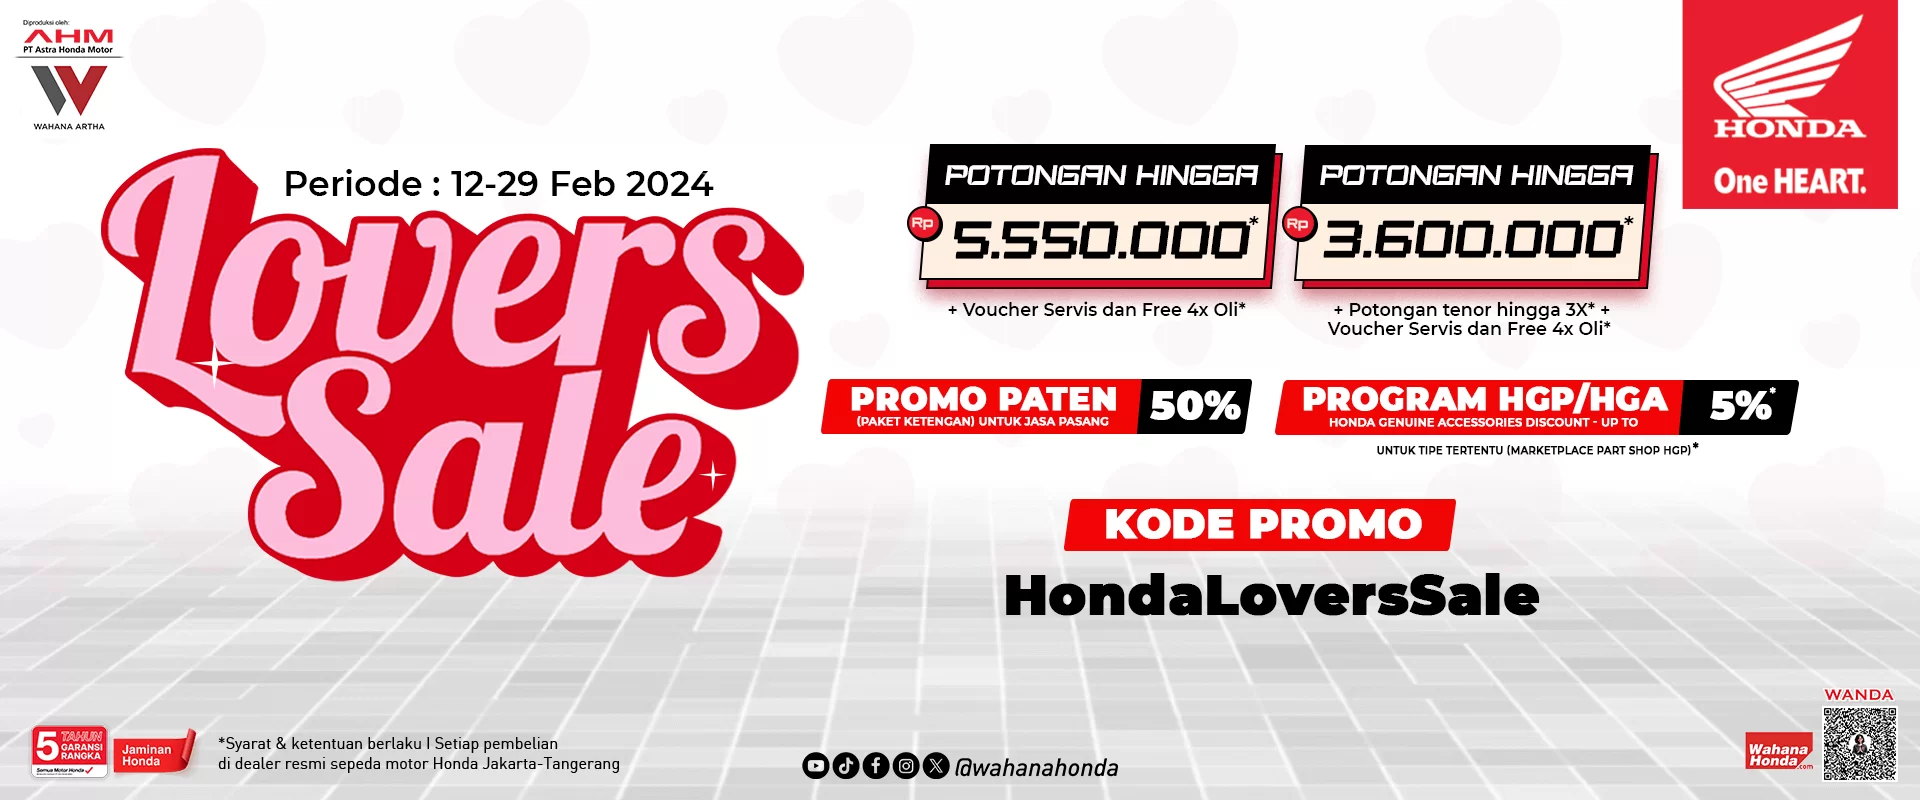 Wahana Honda Virtual Expo 12-29 Februari 2024